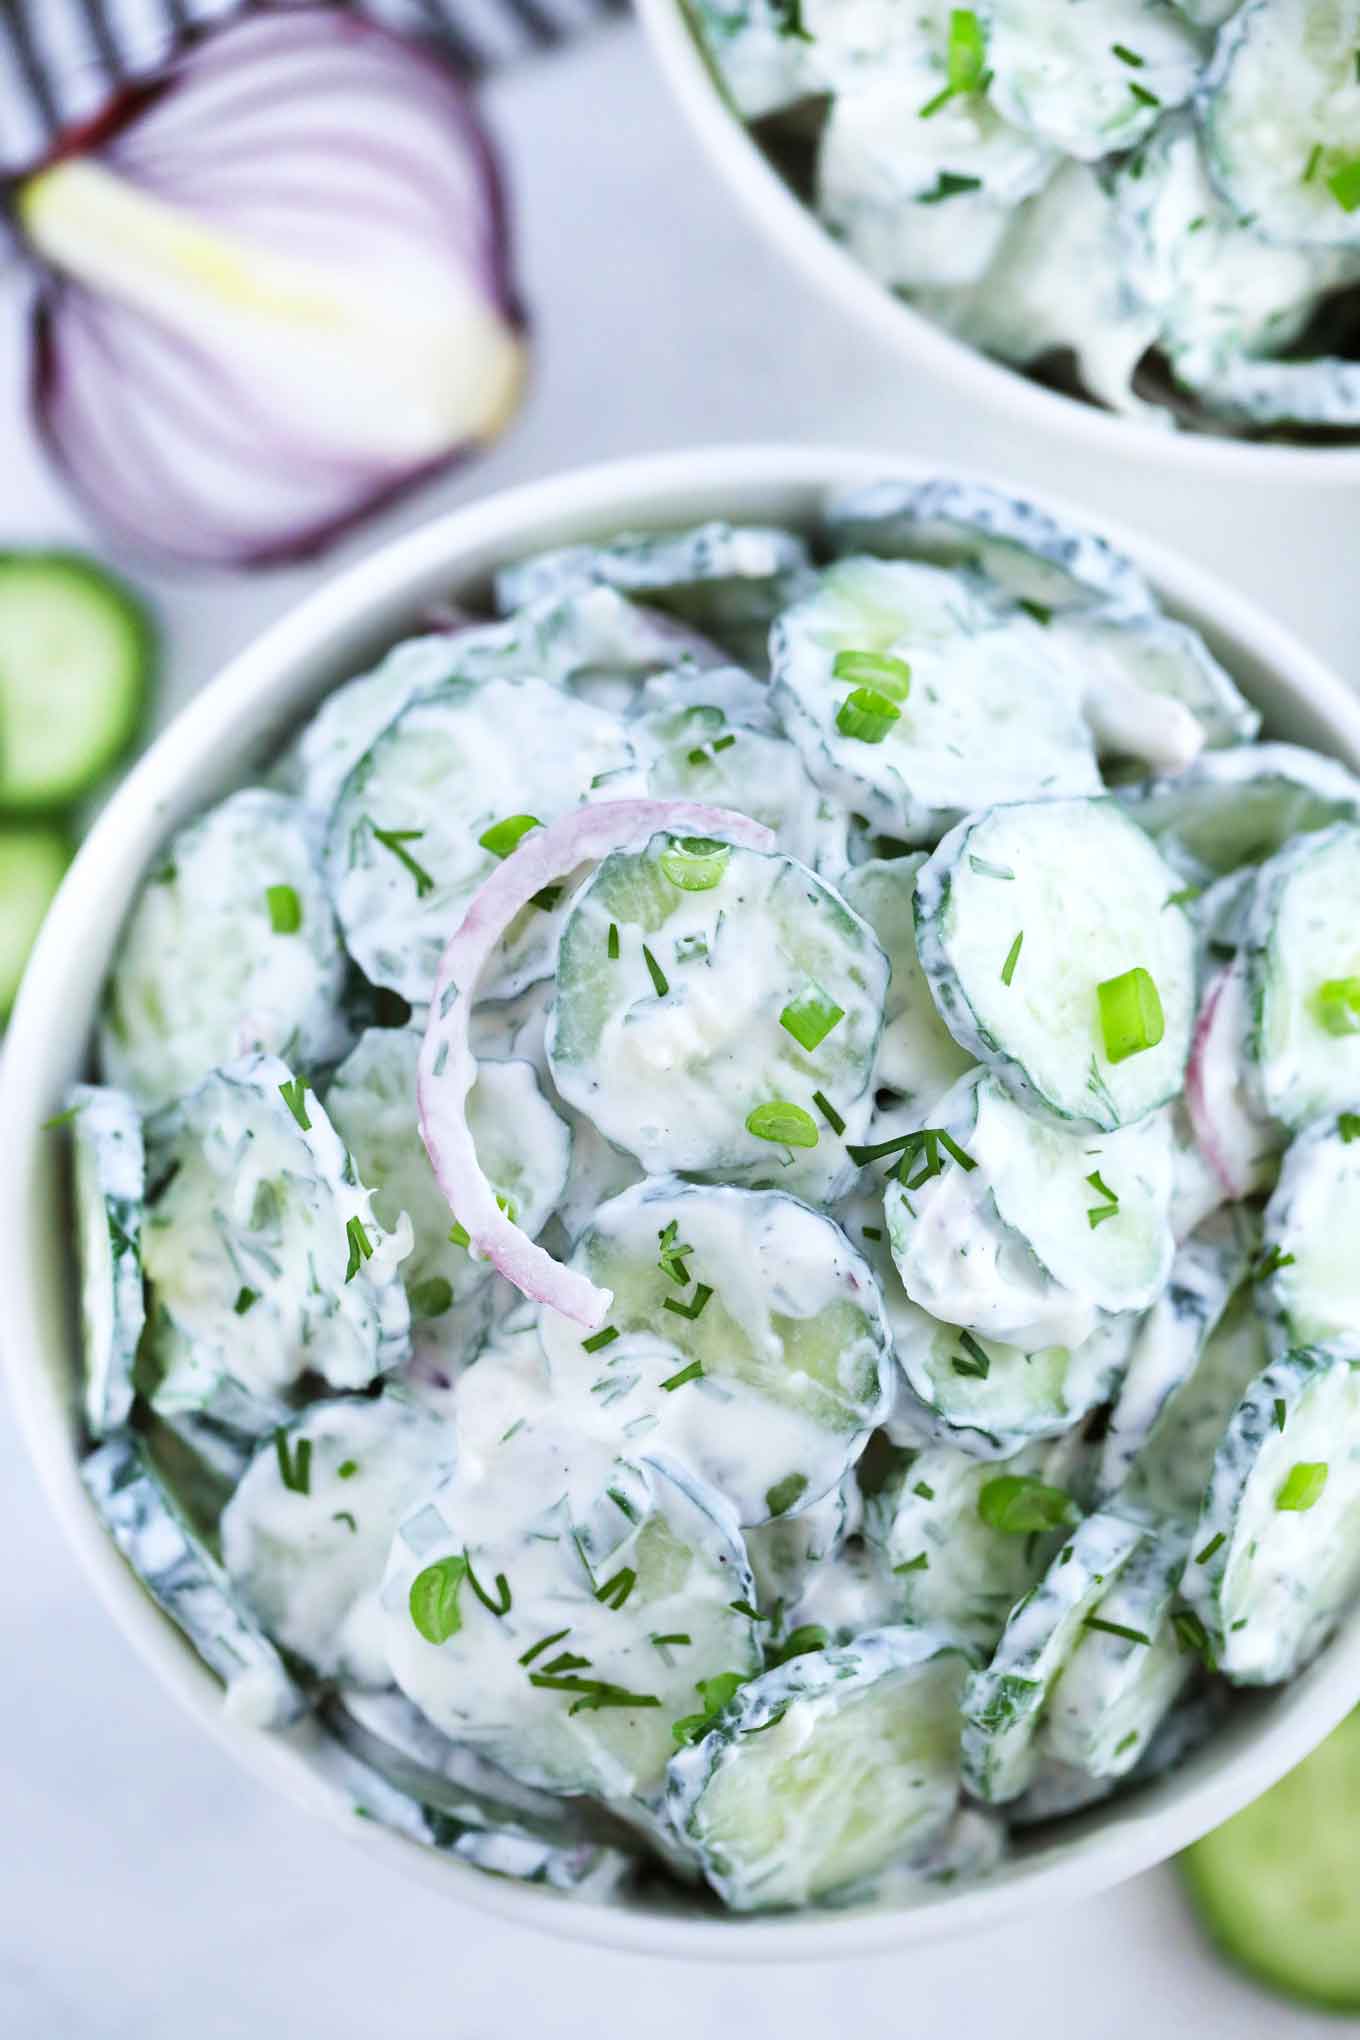 Creamy Cucumber Salad Recipe Sandsm